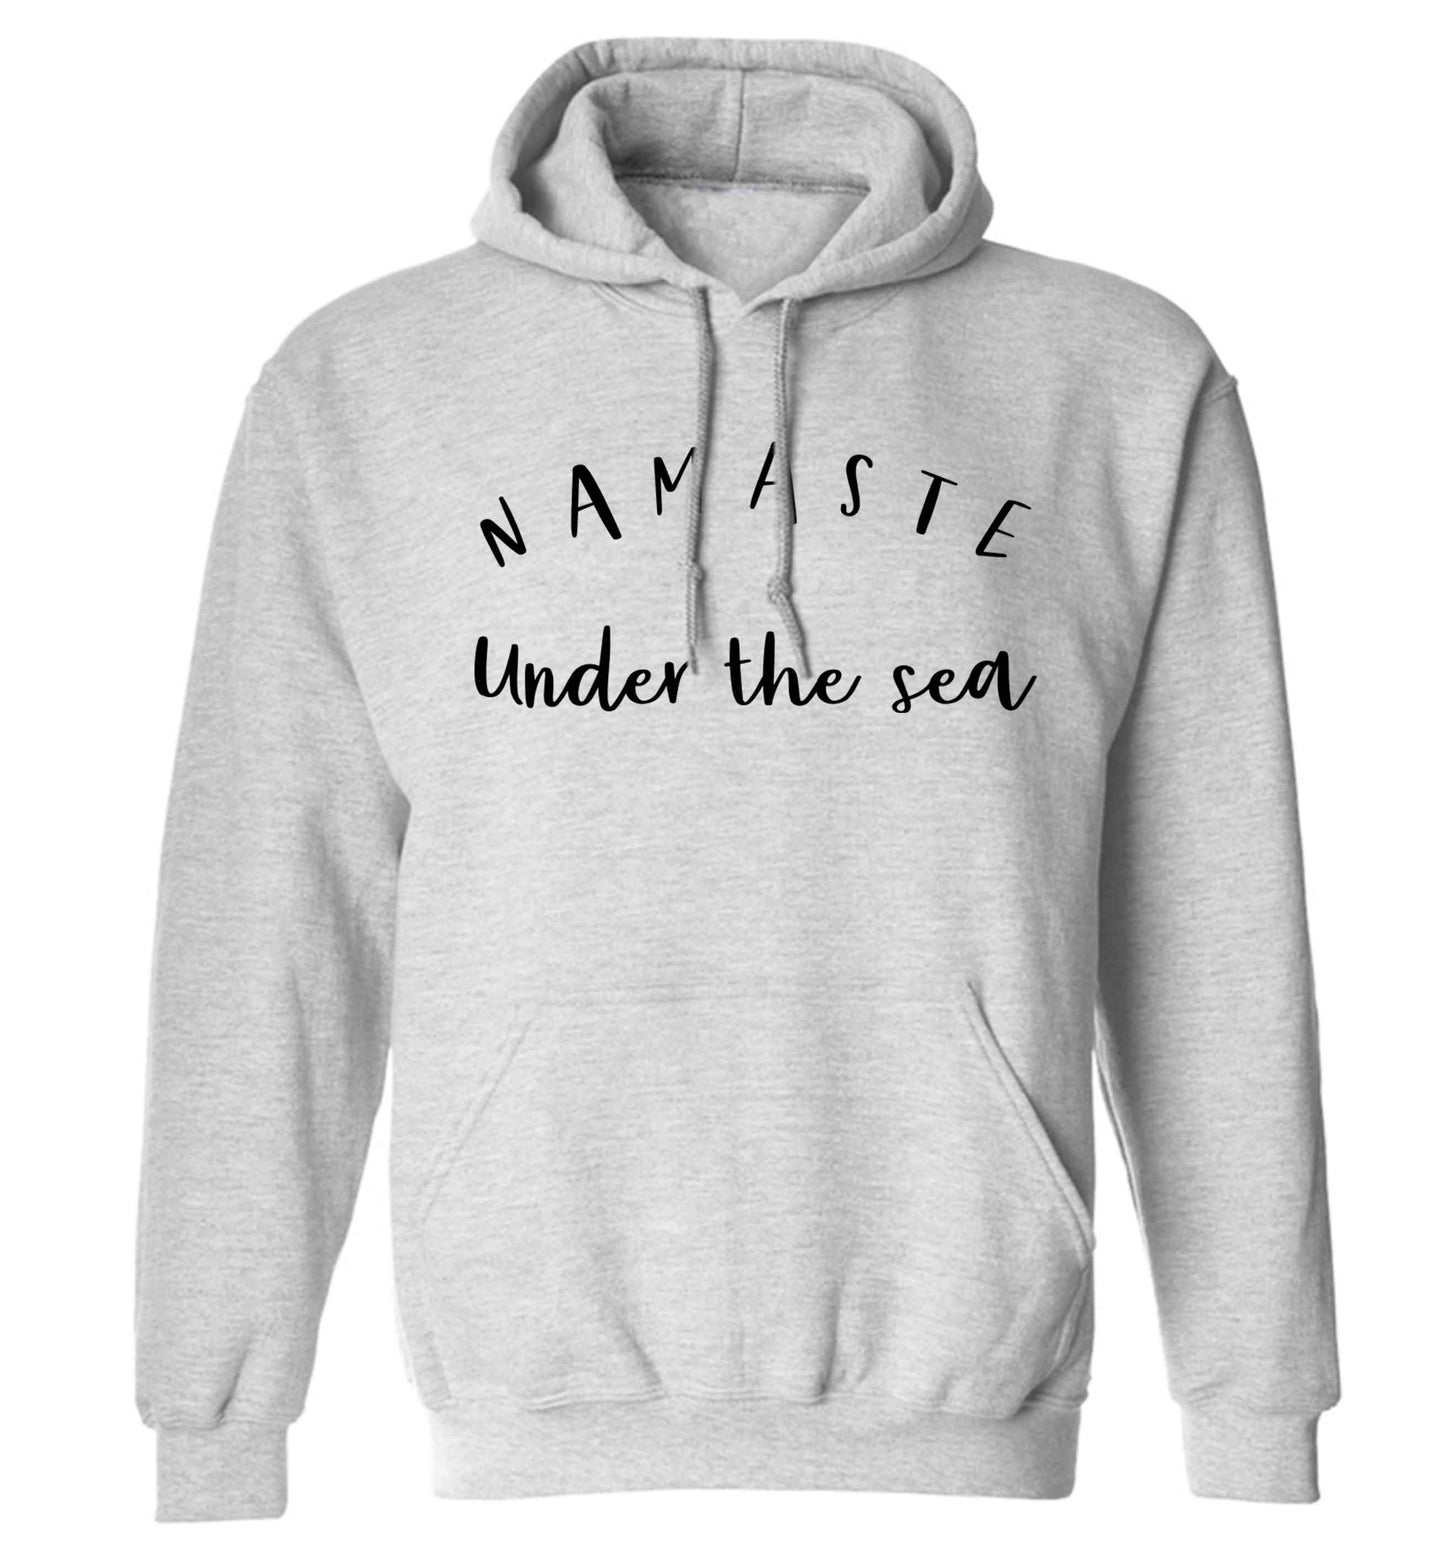 Namaste under the water adults unisex grey hoodie 2XL